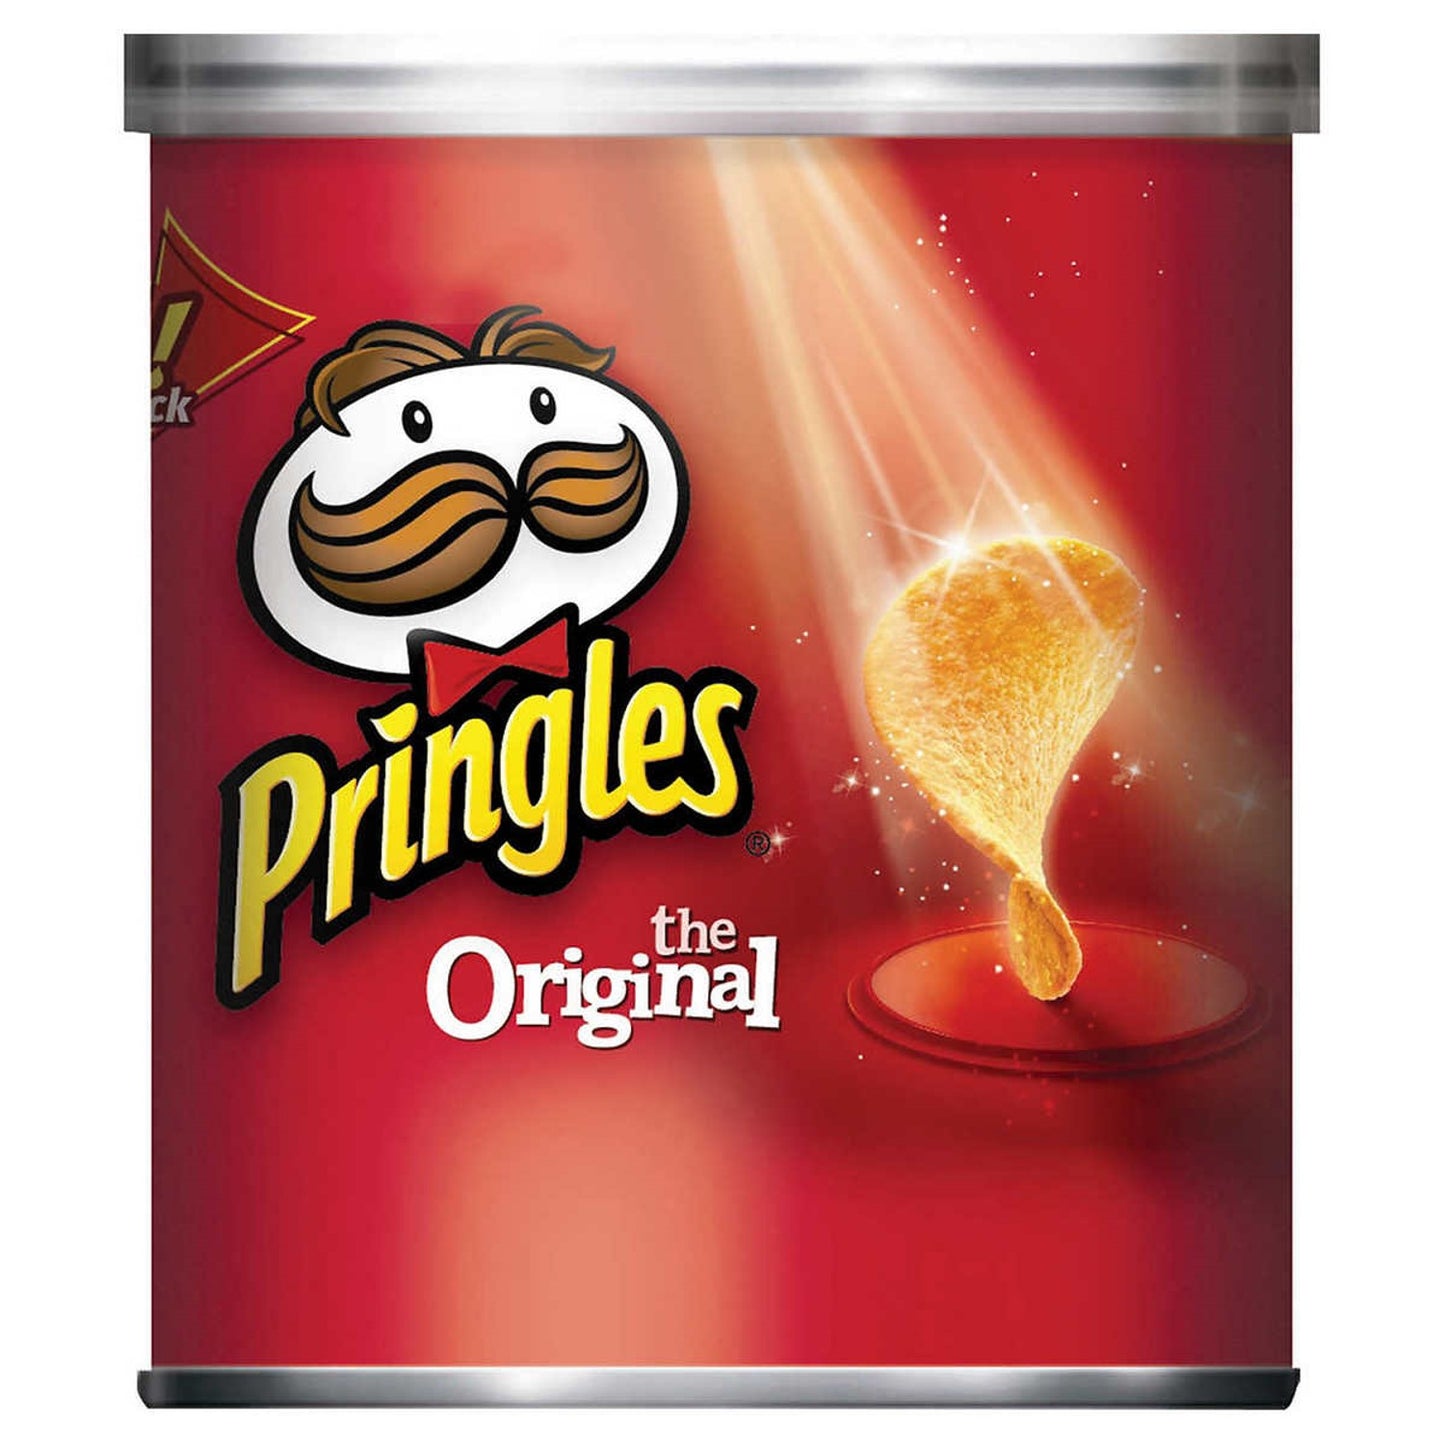 Pringles Potato Crisps, Original, Sour Cream,  Cheese 1.3 oz, 12 Can ea, 36-Pack